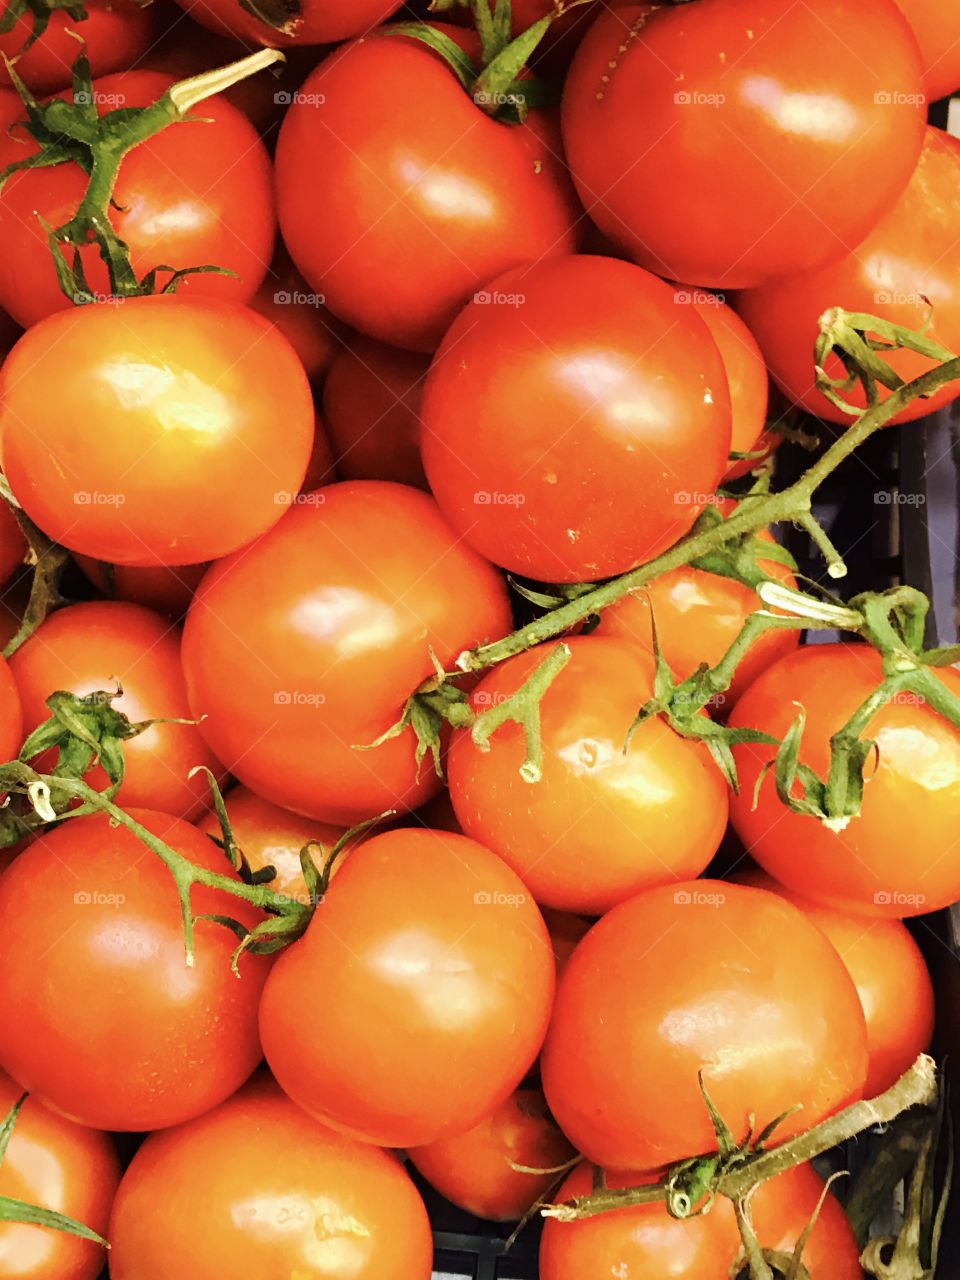 Tomatoes-fruit-veggies-reds-healthy 